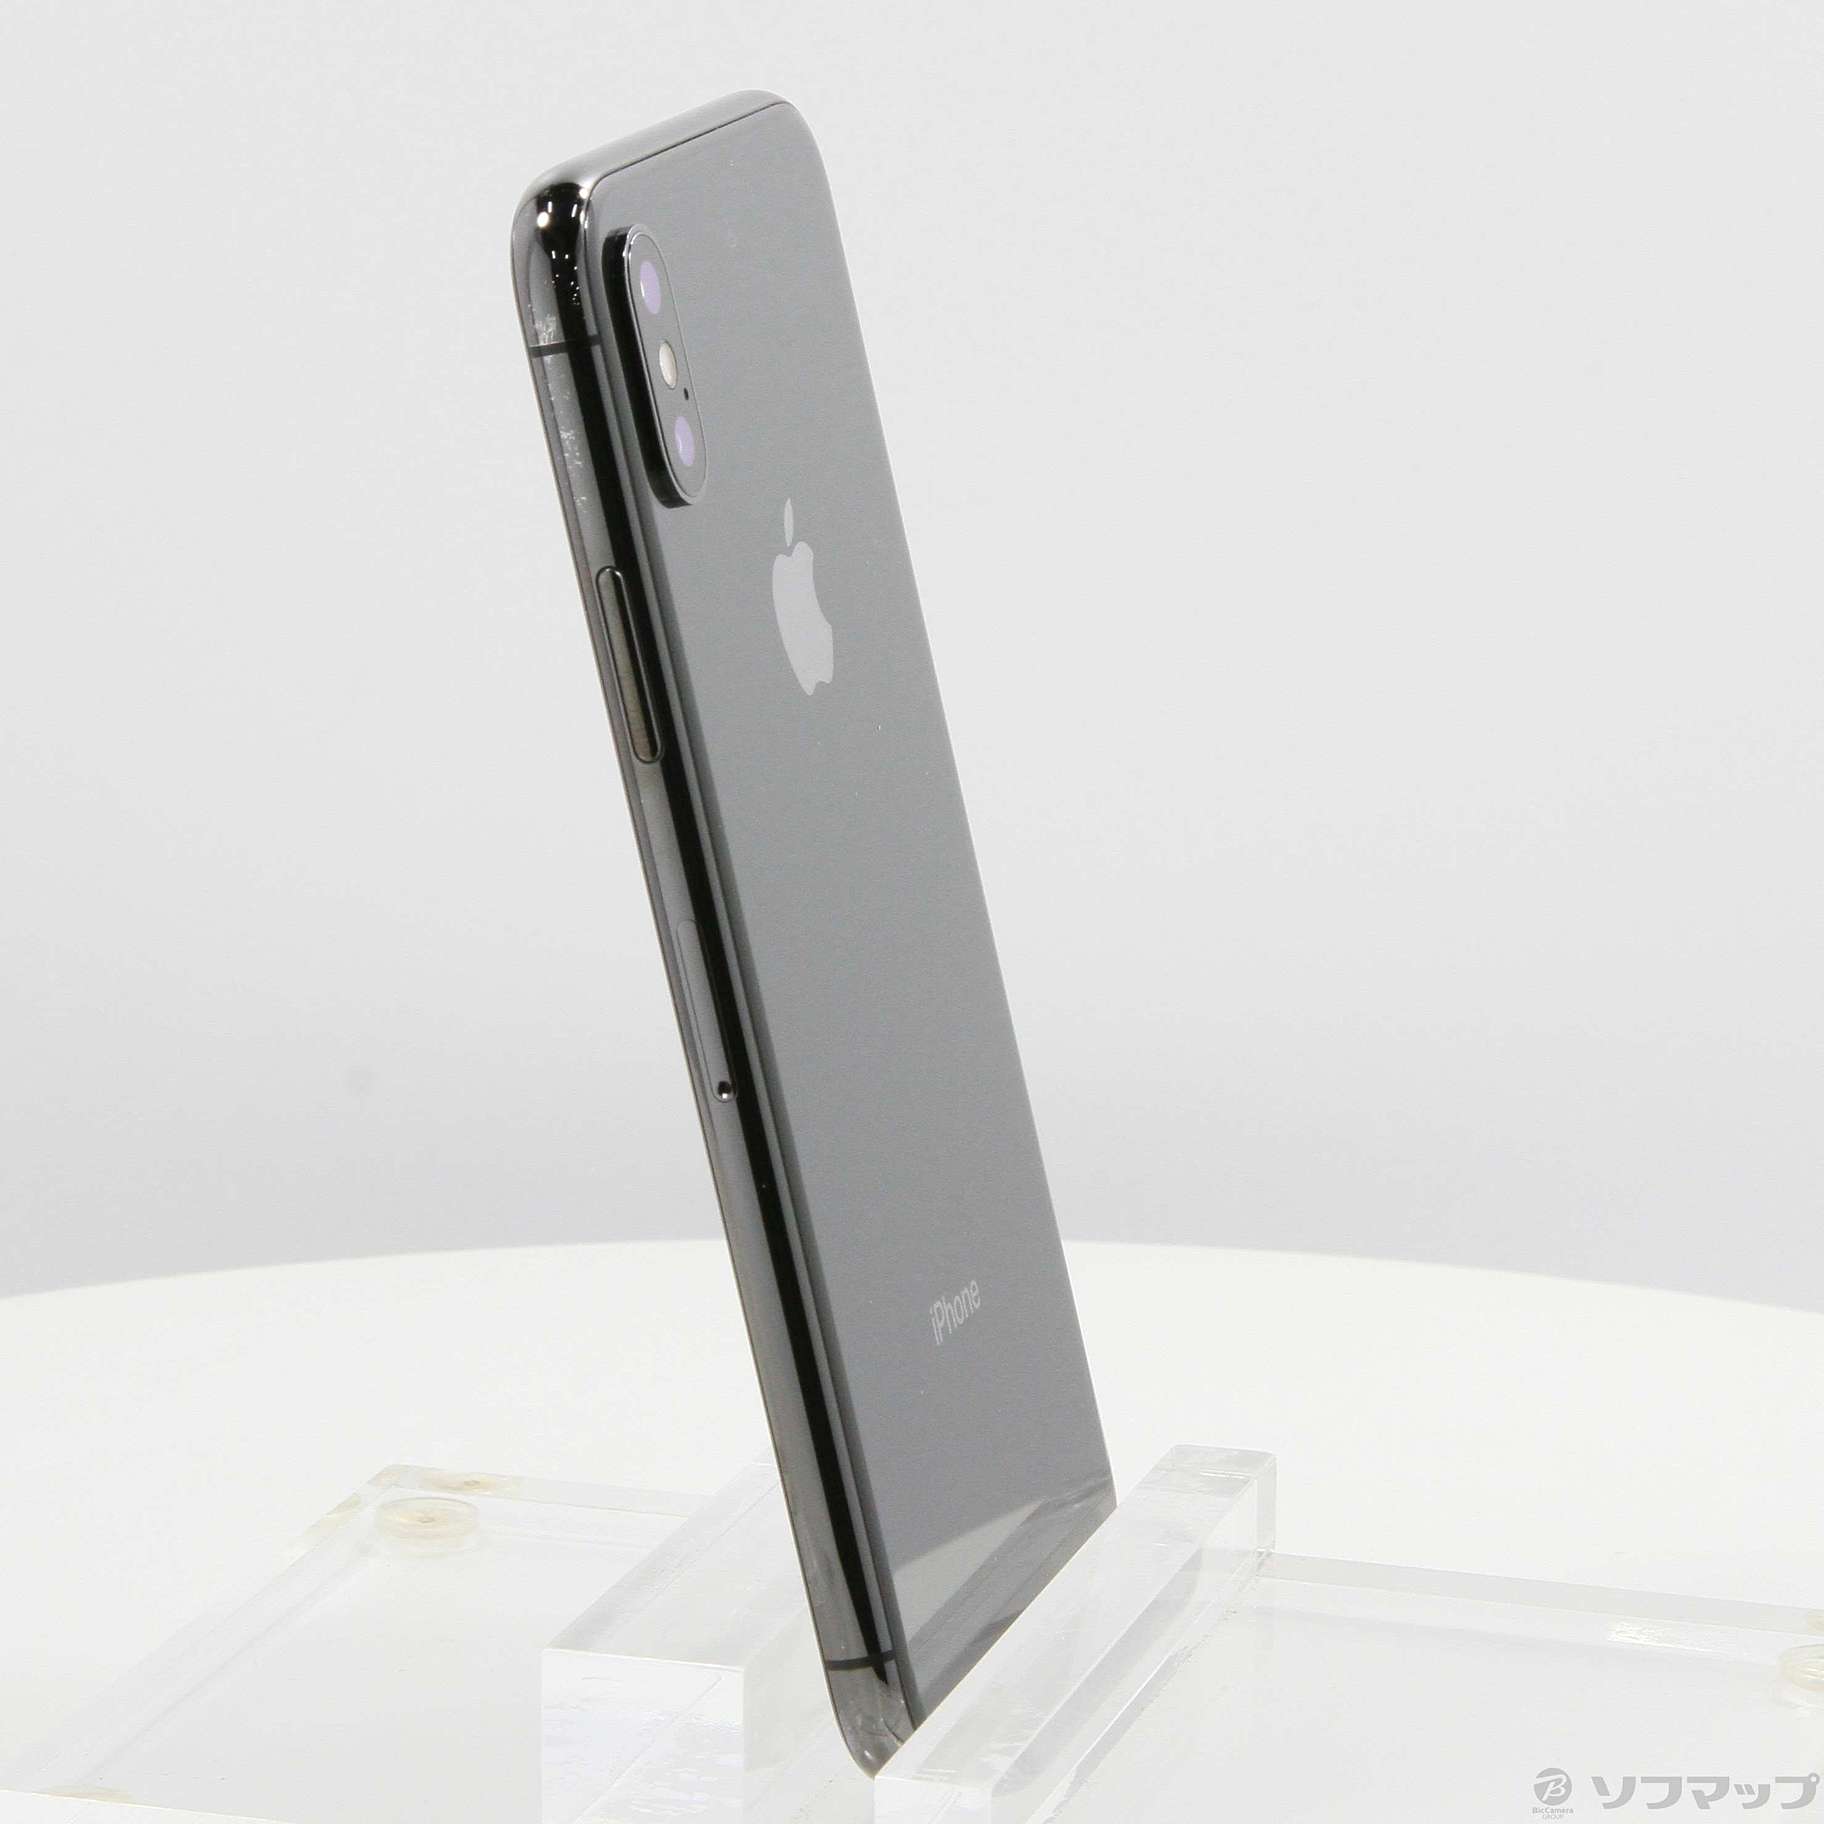 iPhoneX 256GB SIMフリー スペースグレイ 新品未開封品-